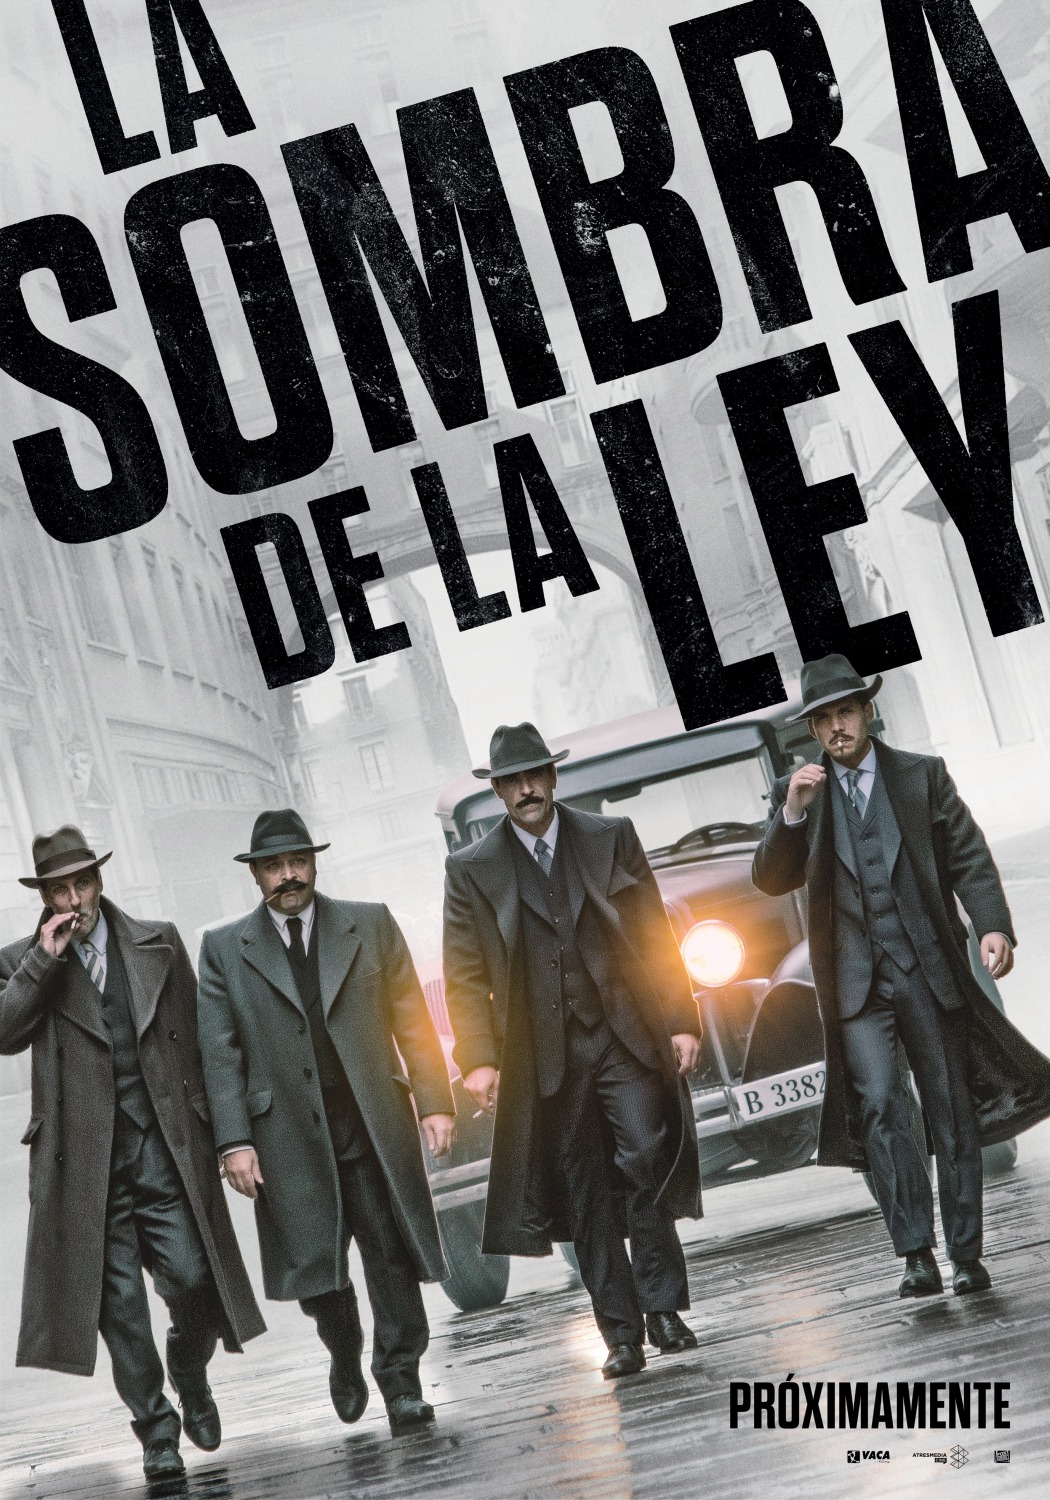 Extra Large Movie Poster Image for La sombra de la ley (#1 of 2)